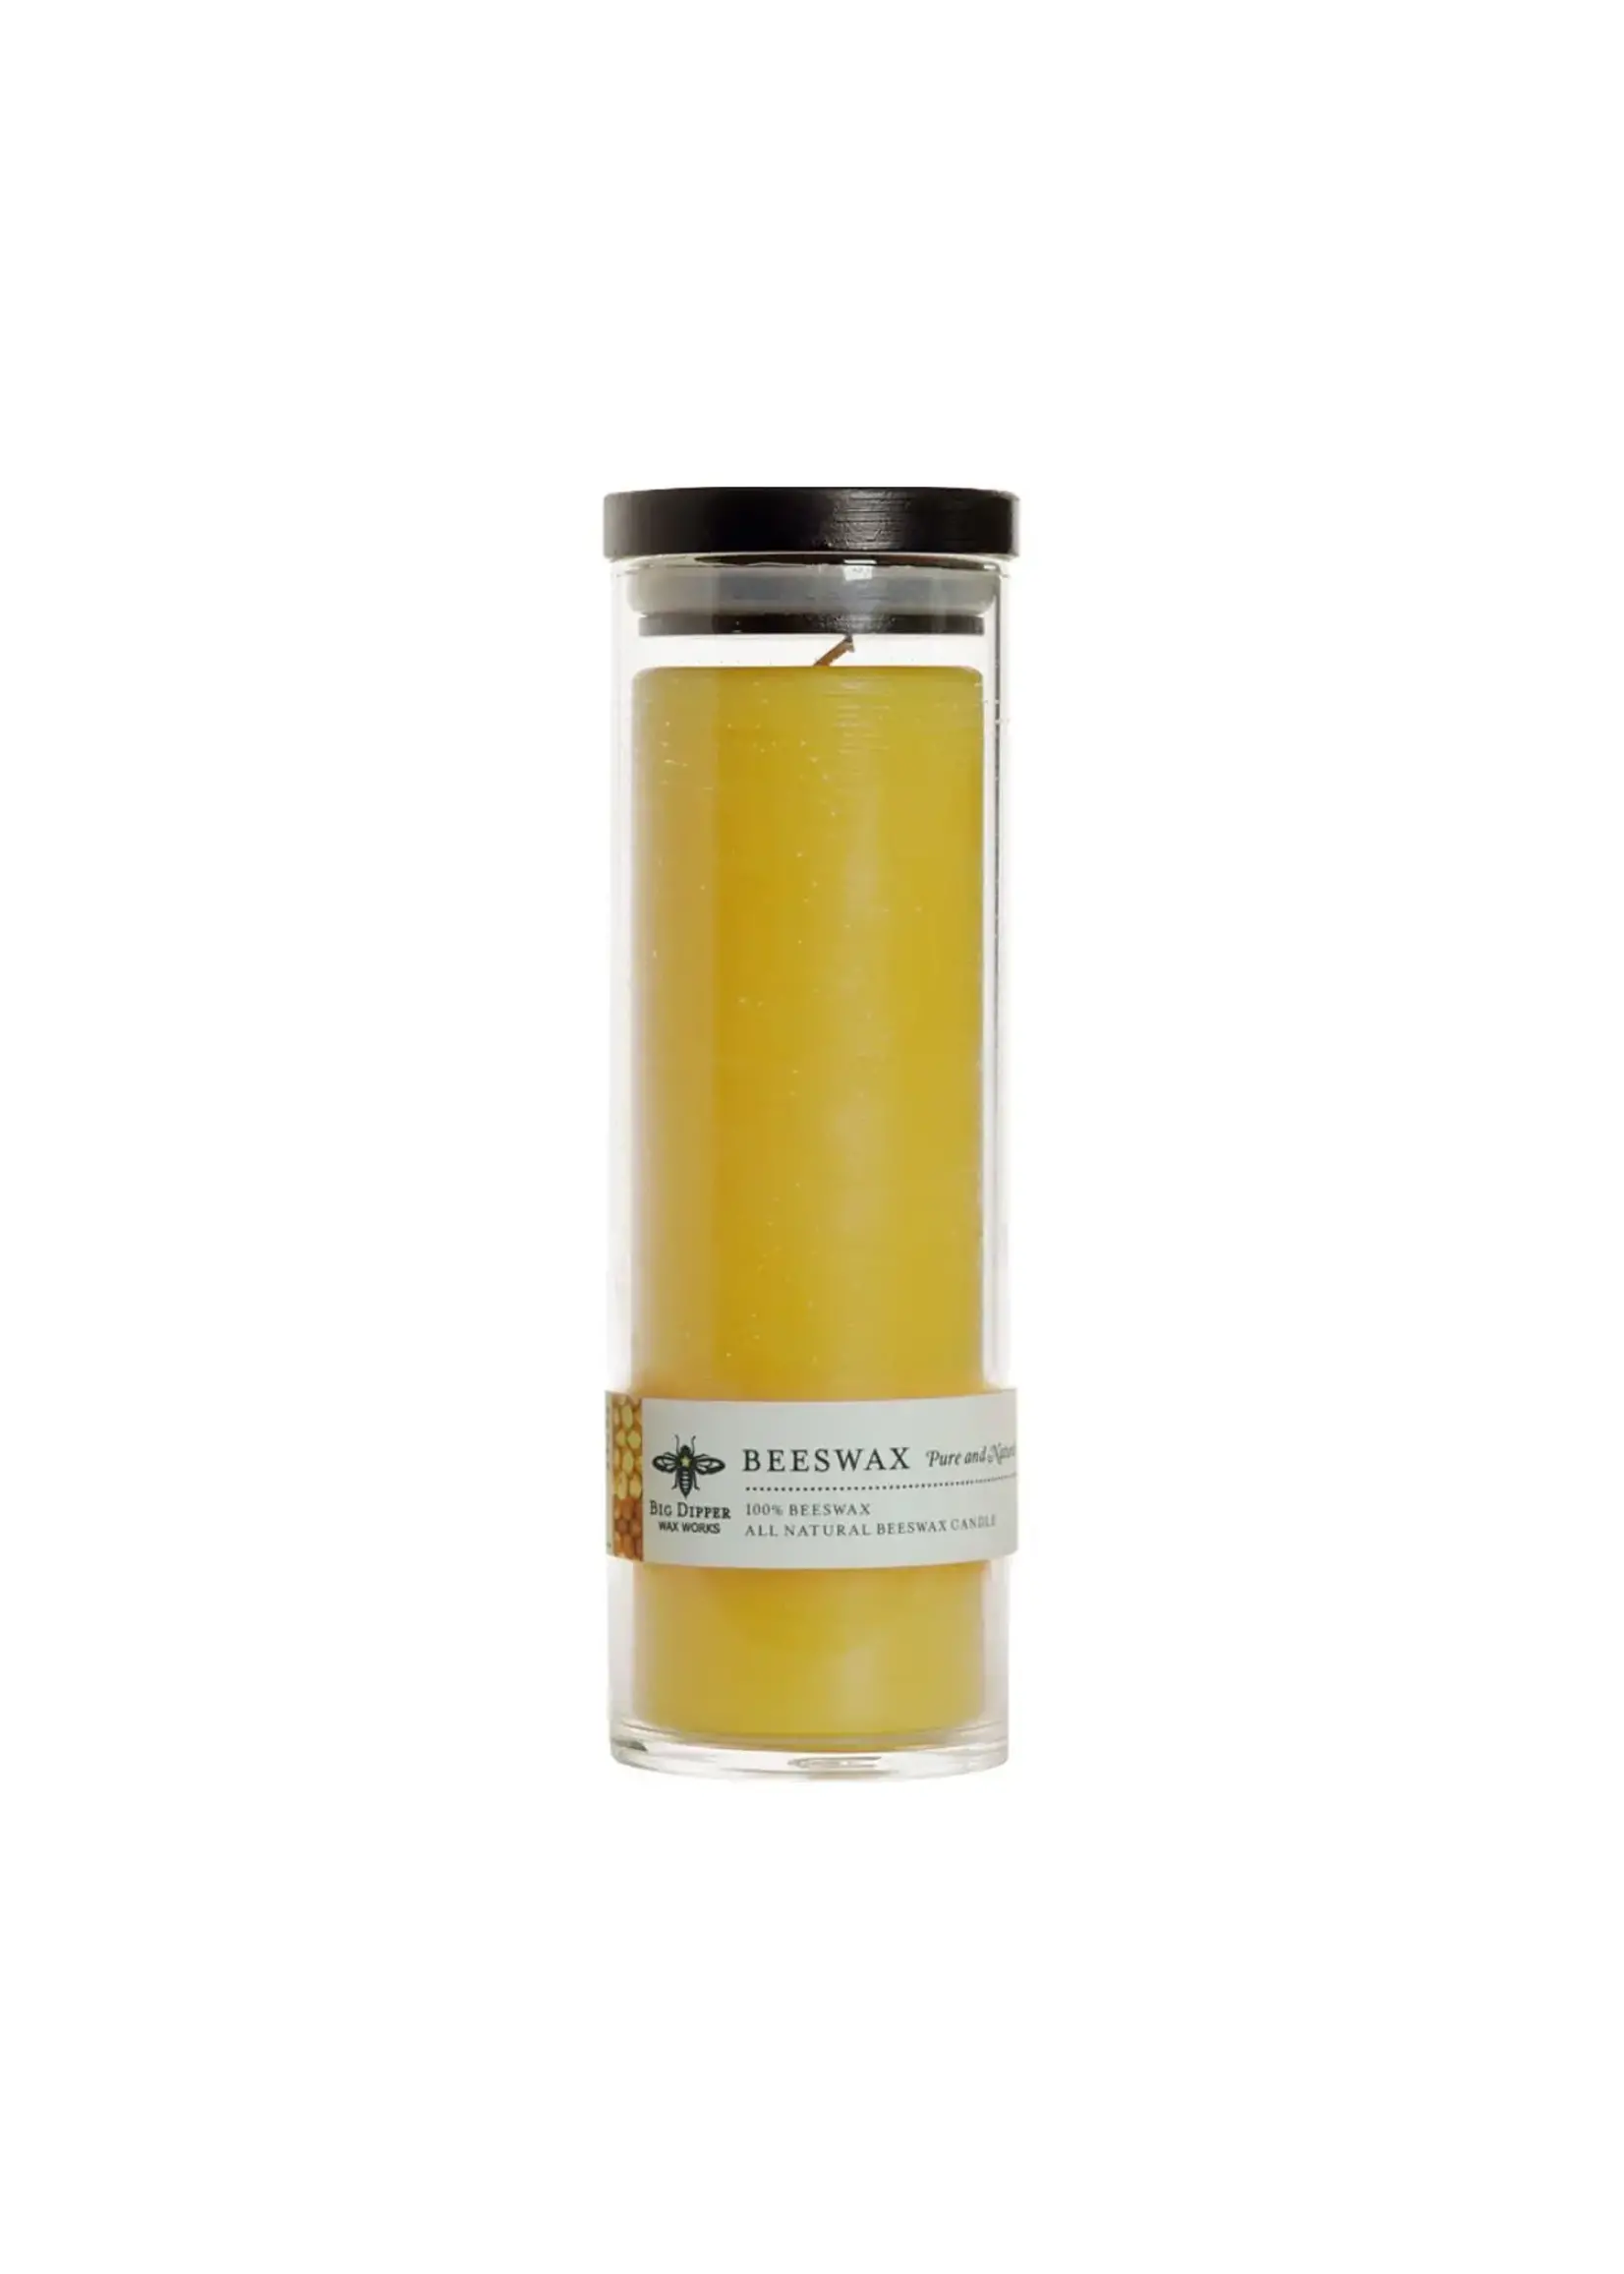 Botanica Beeswax Candle in Blown Glass Tangerine - Geranium / 22 oz